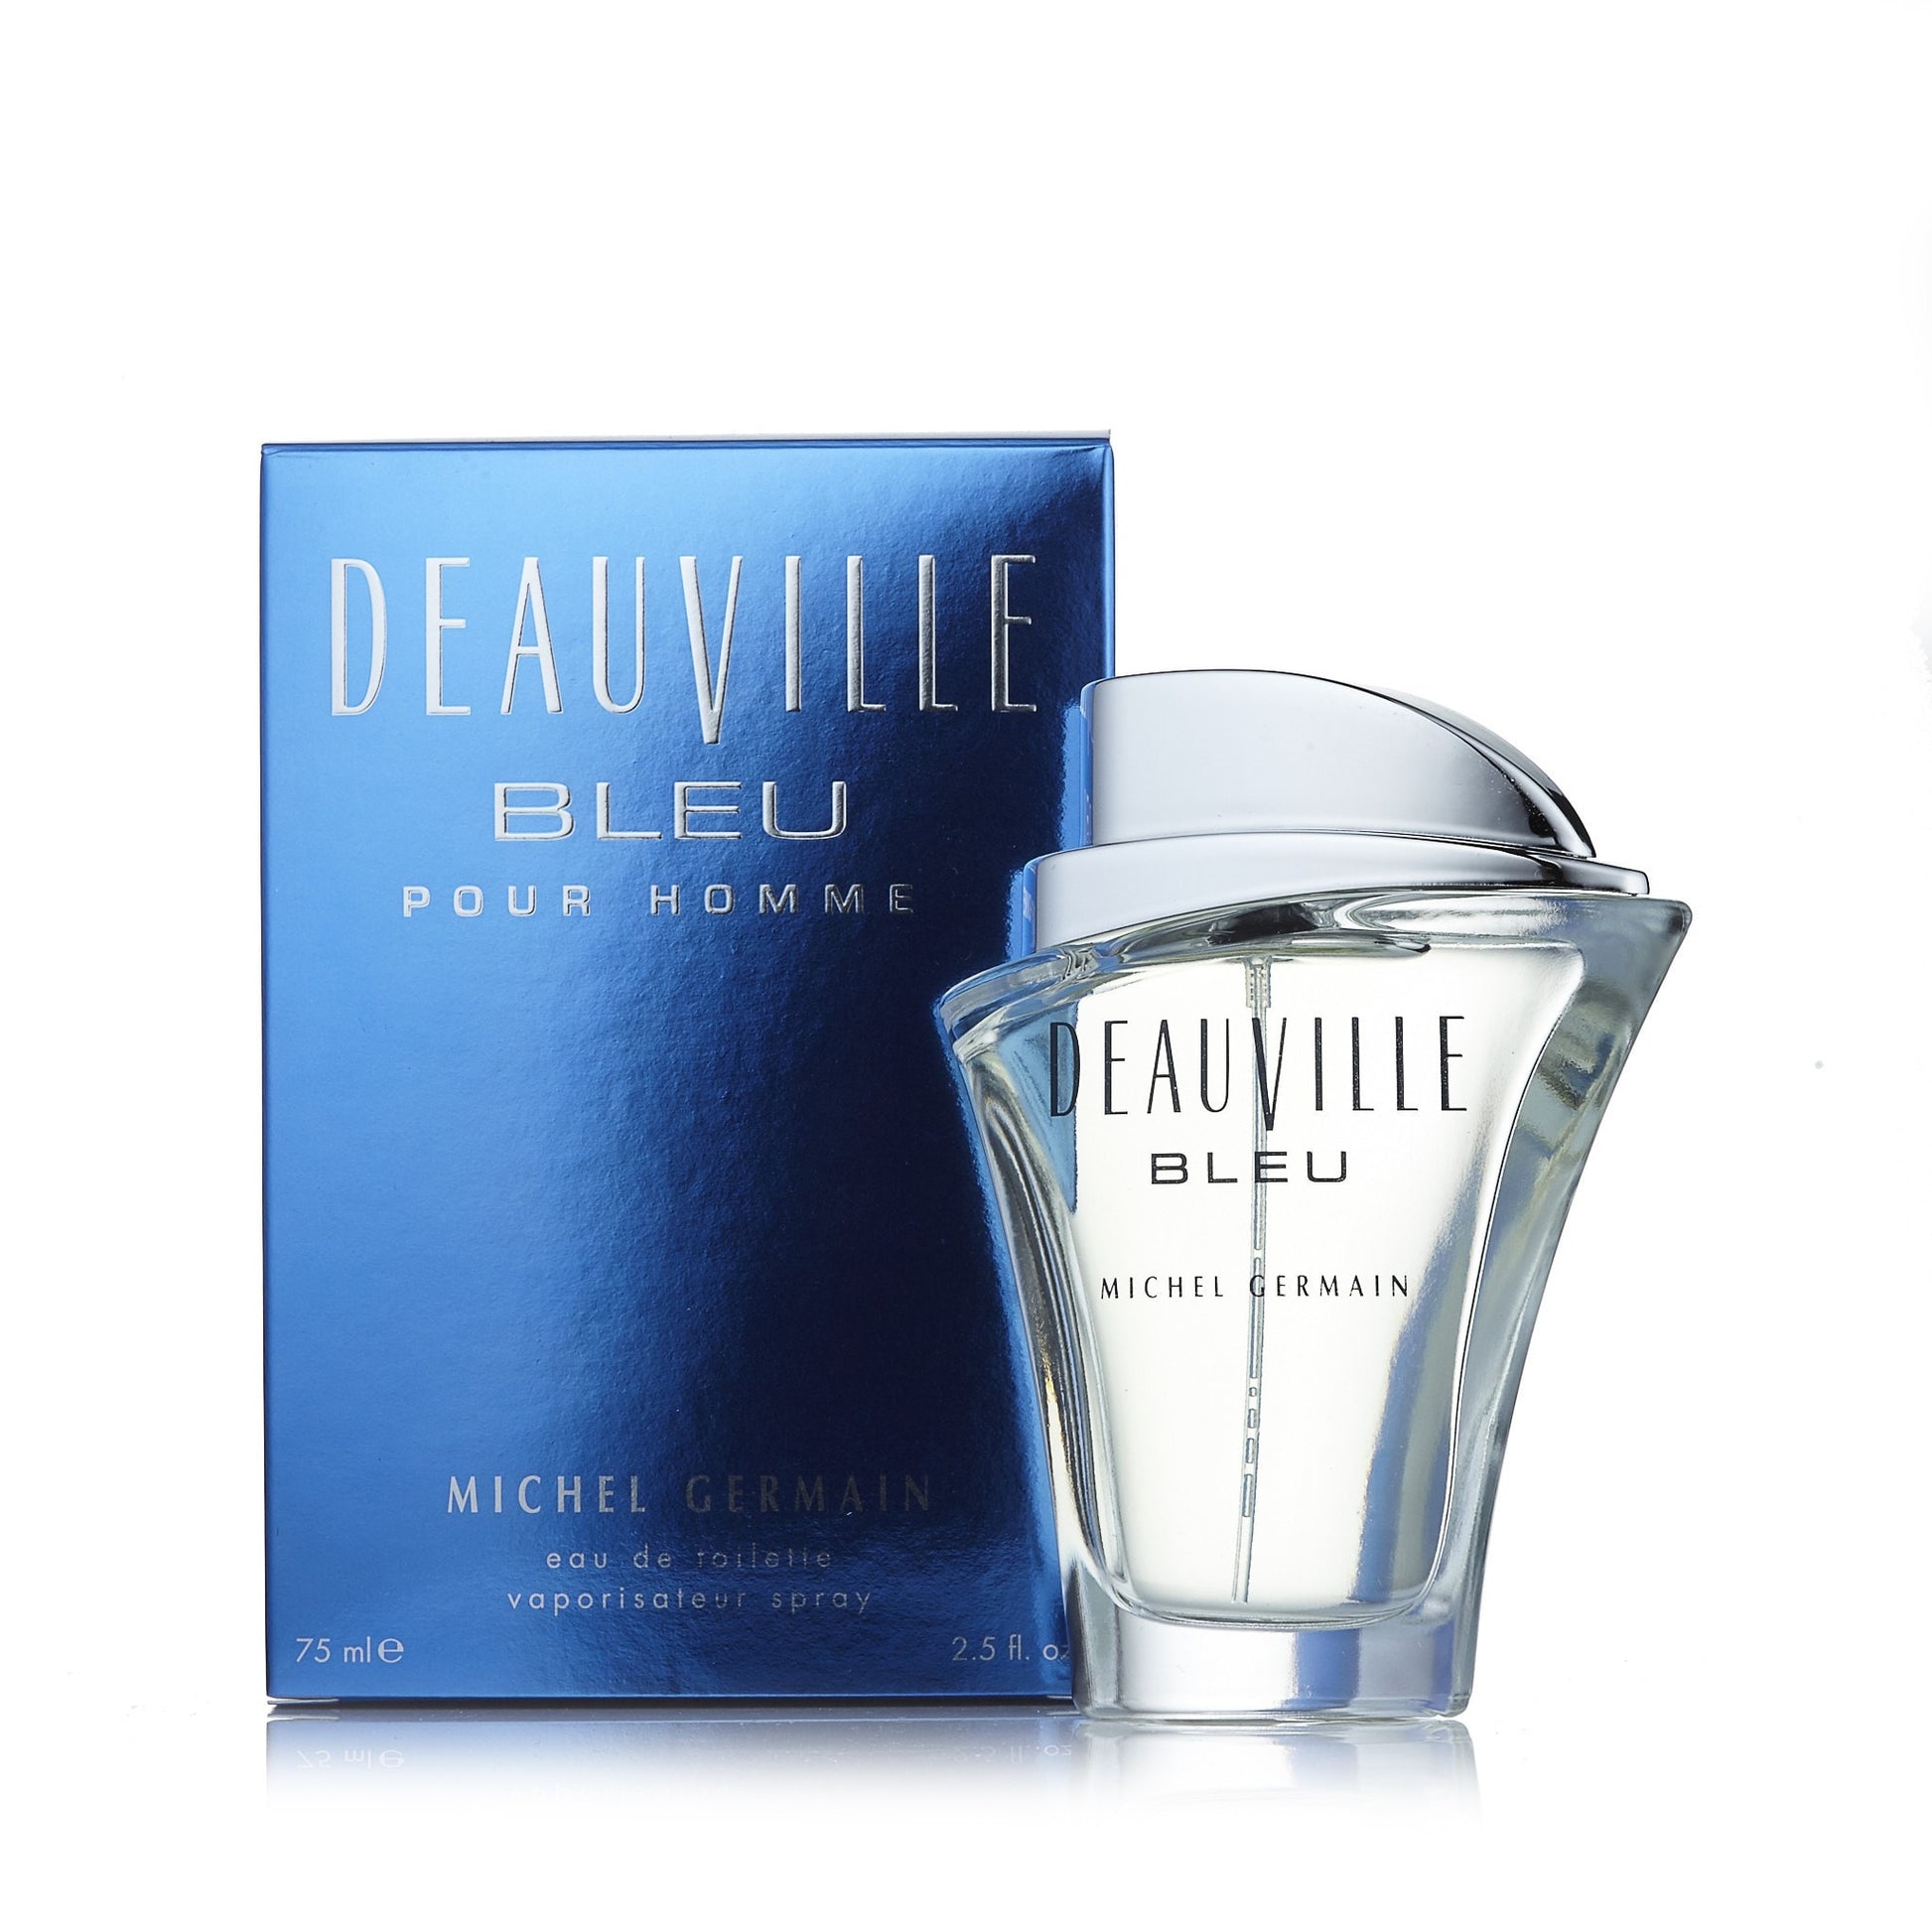 Deauville Bleu Eau de Toilette Spray for Men 2.5 oz. Click to open in modal